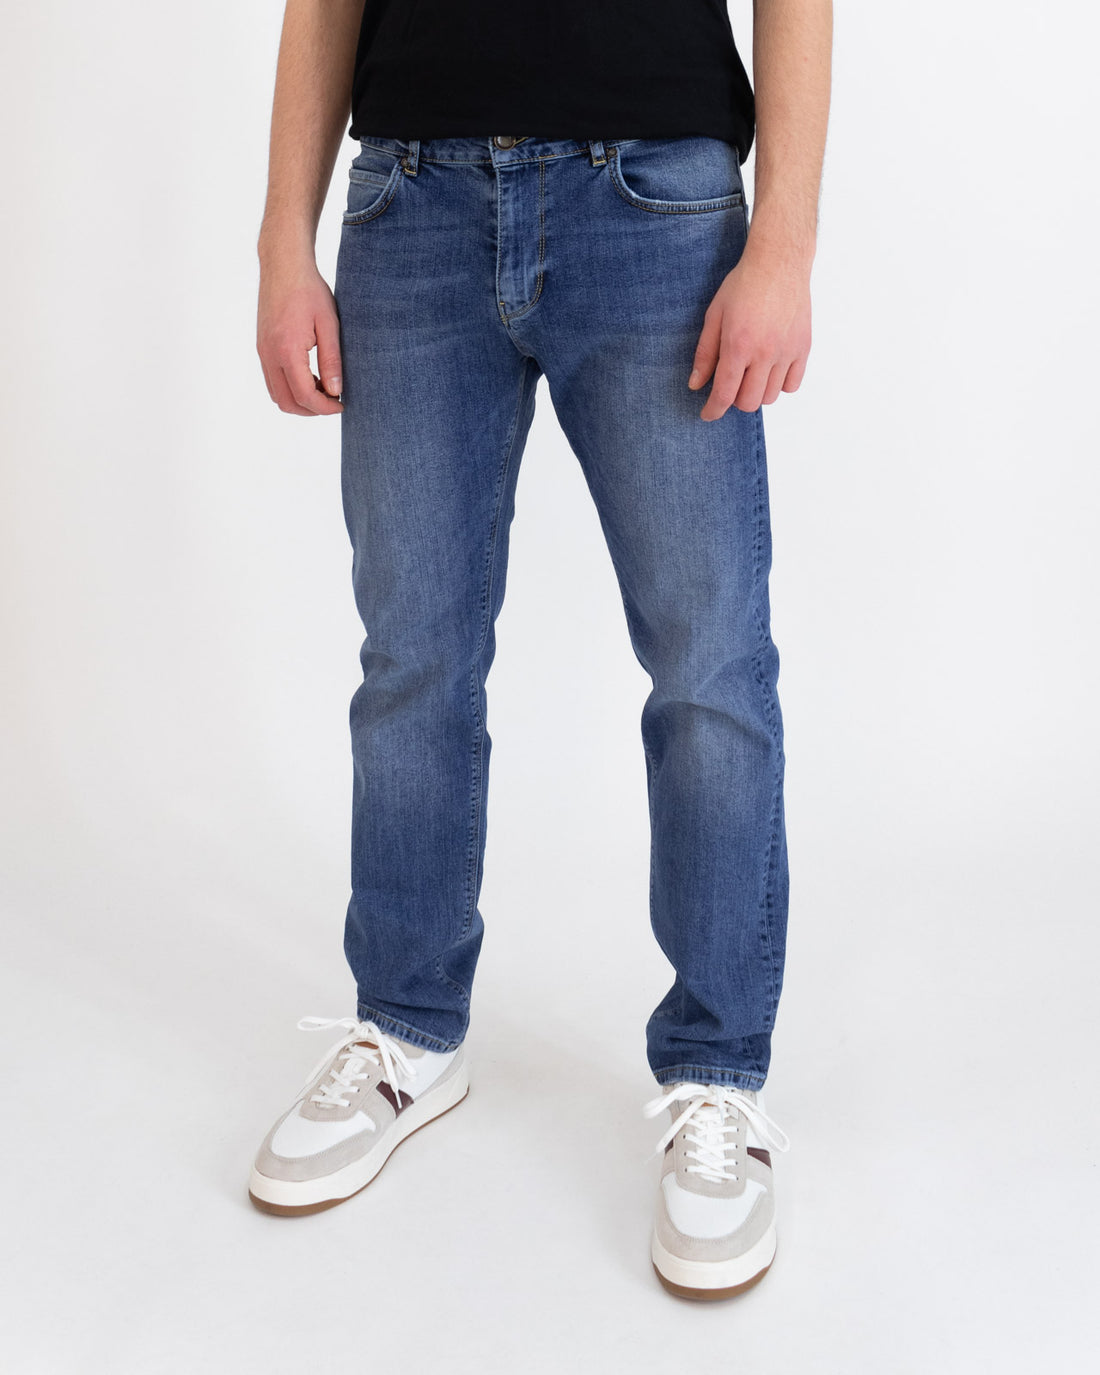 Jeans regular classic - PGrax